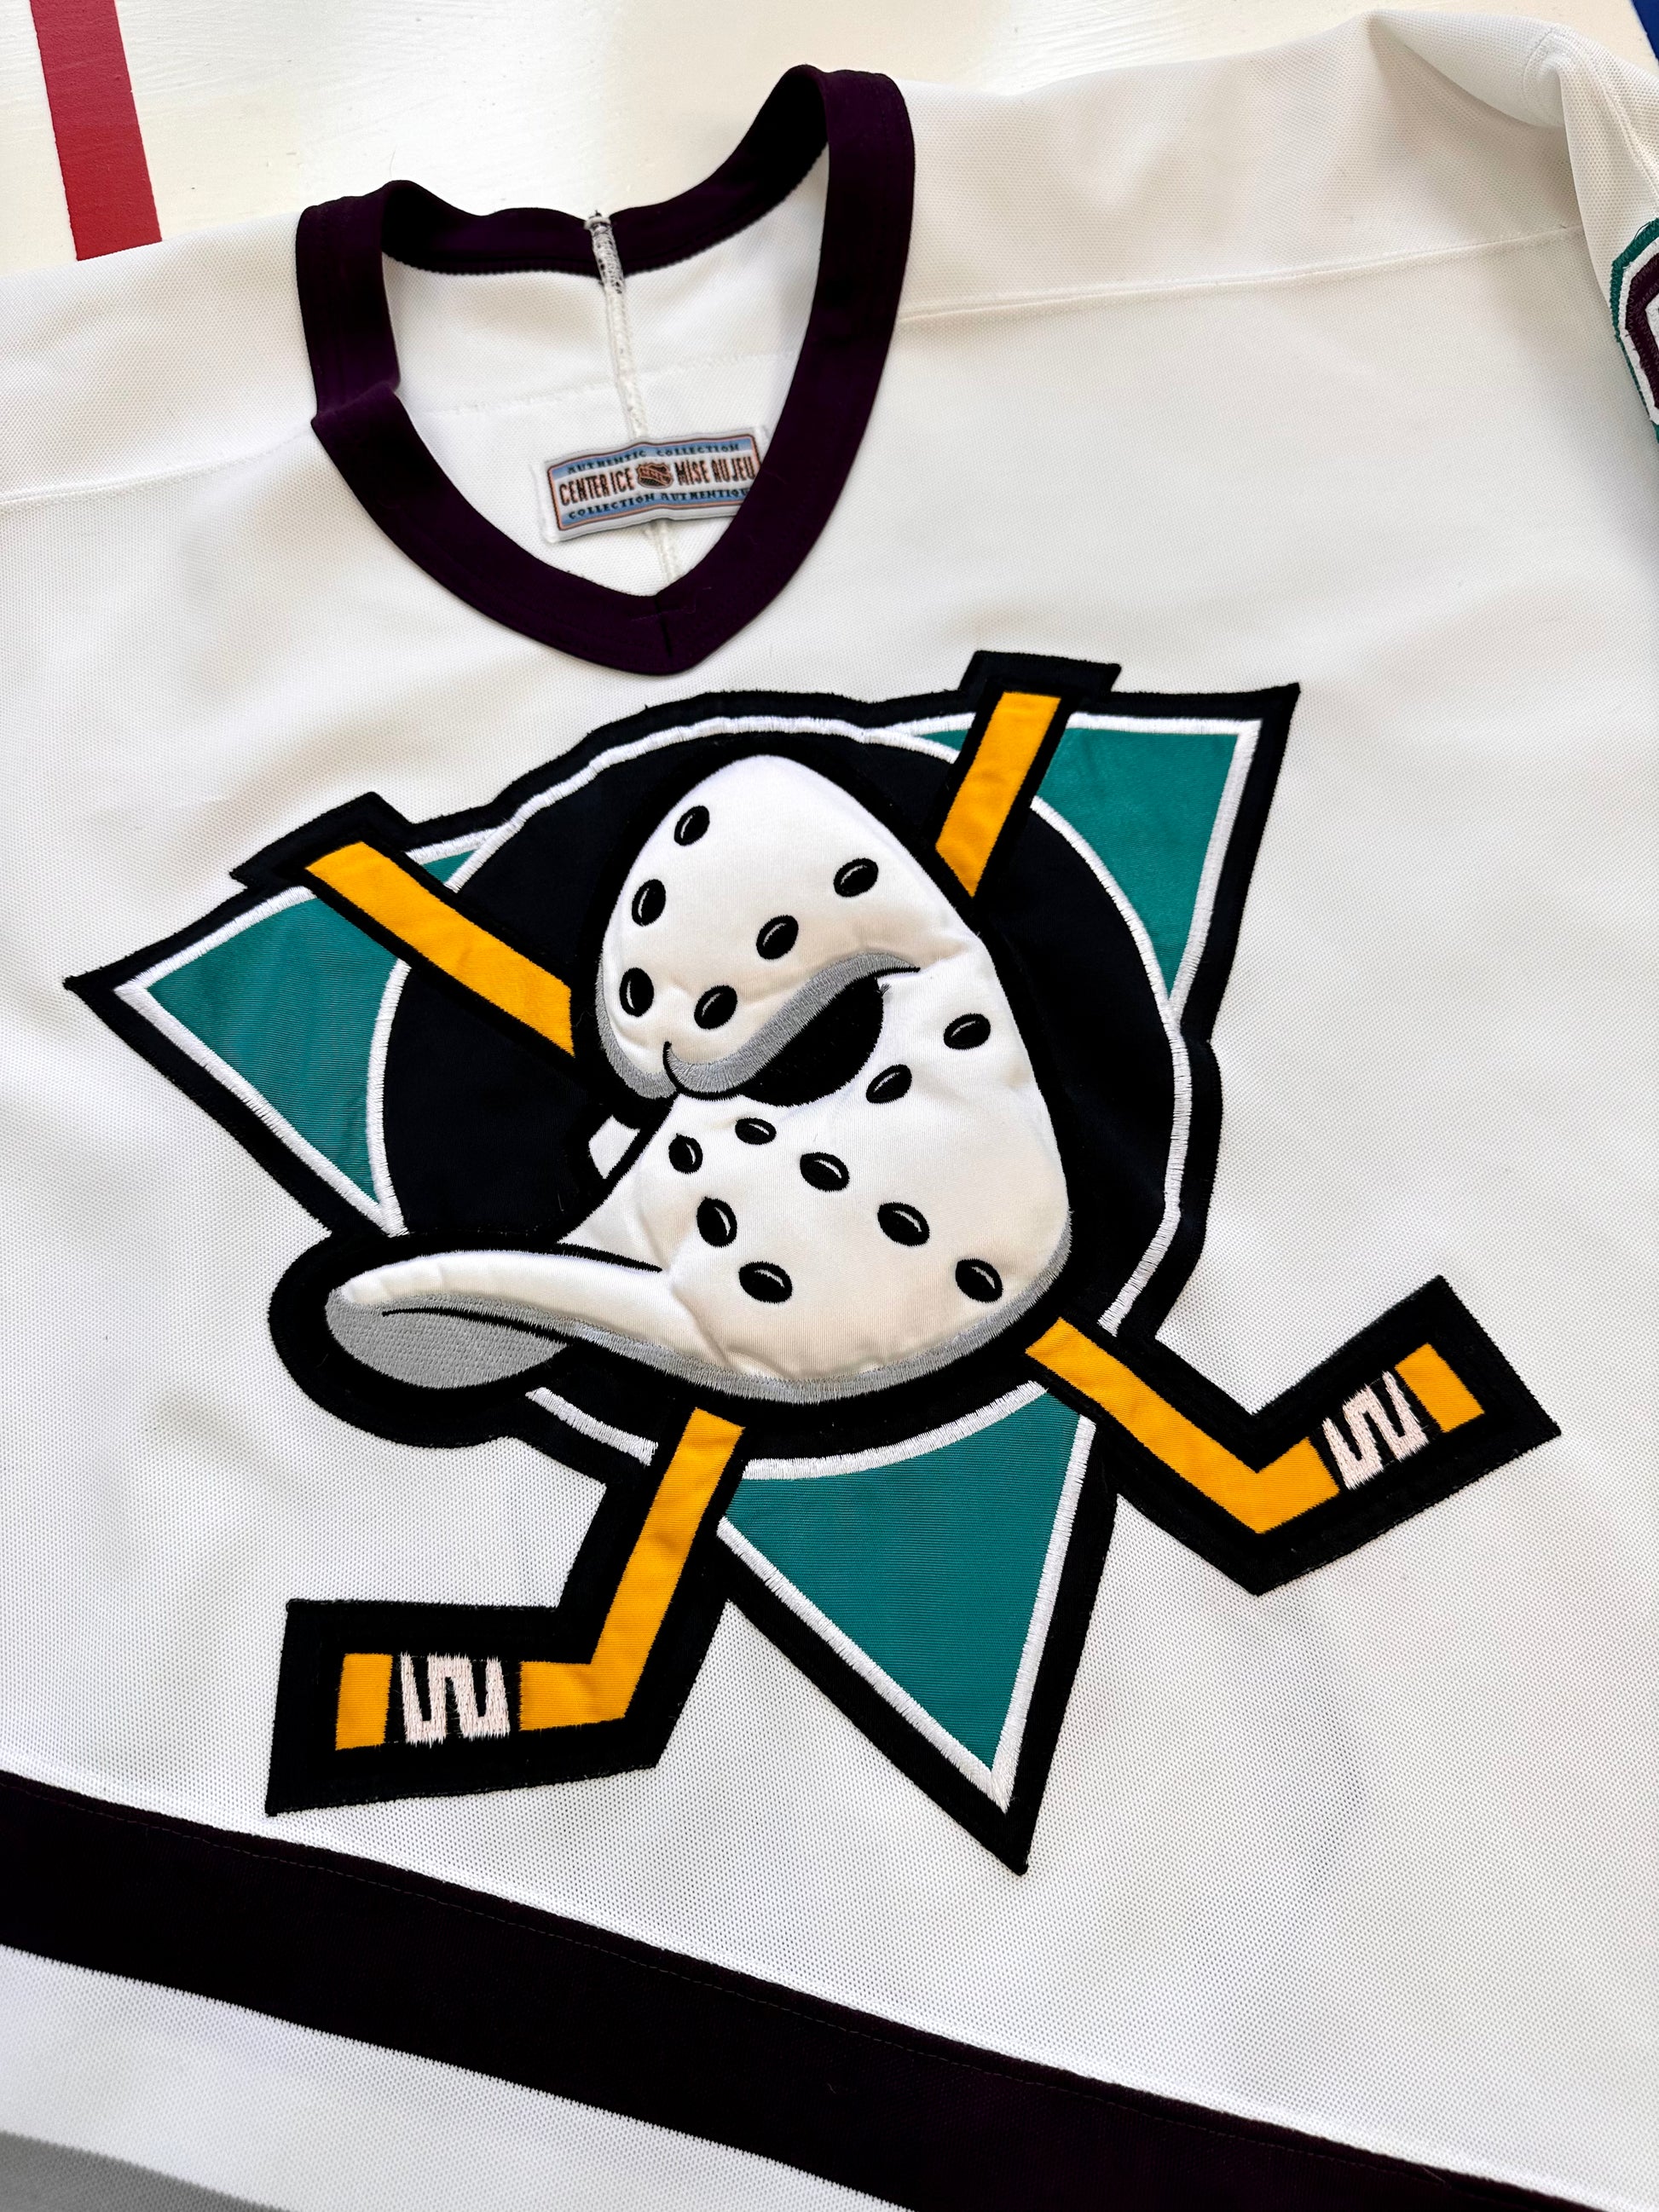 Mighty Ducks Replica Hockey Jersey Large 52